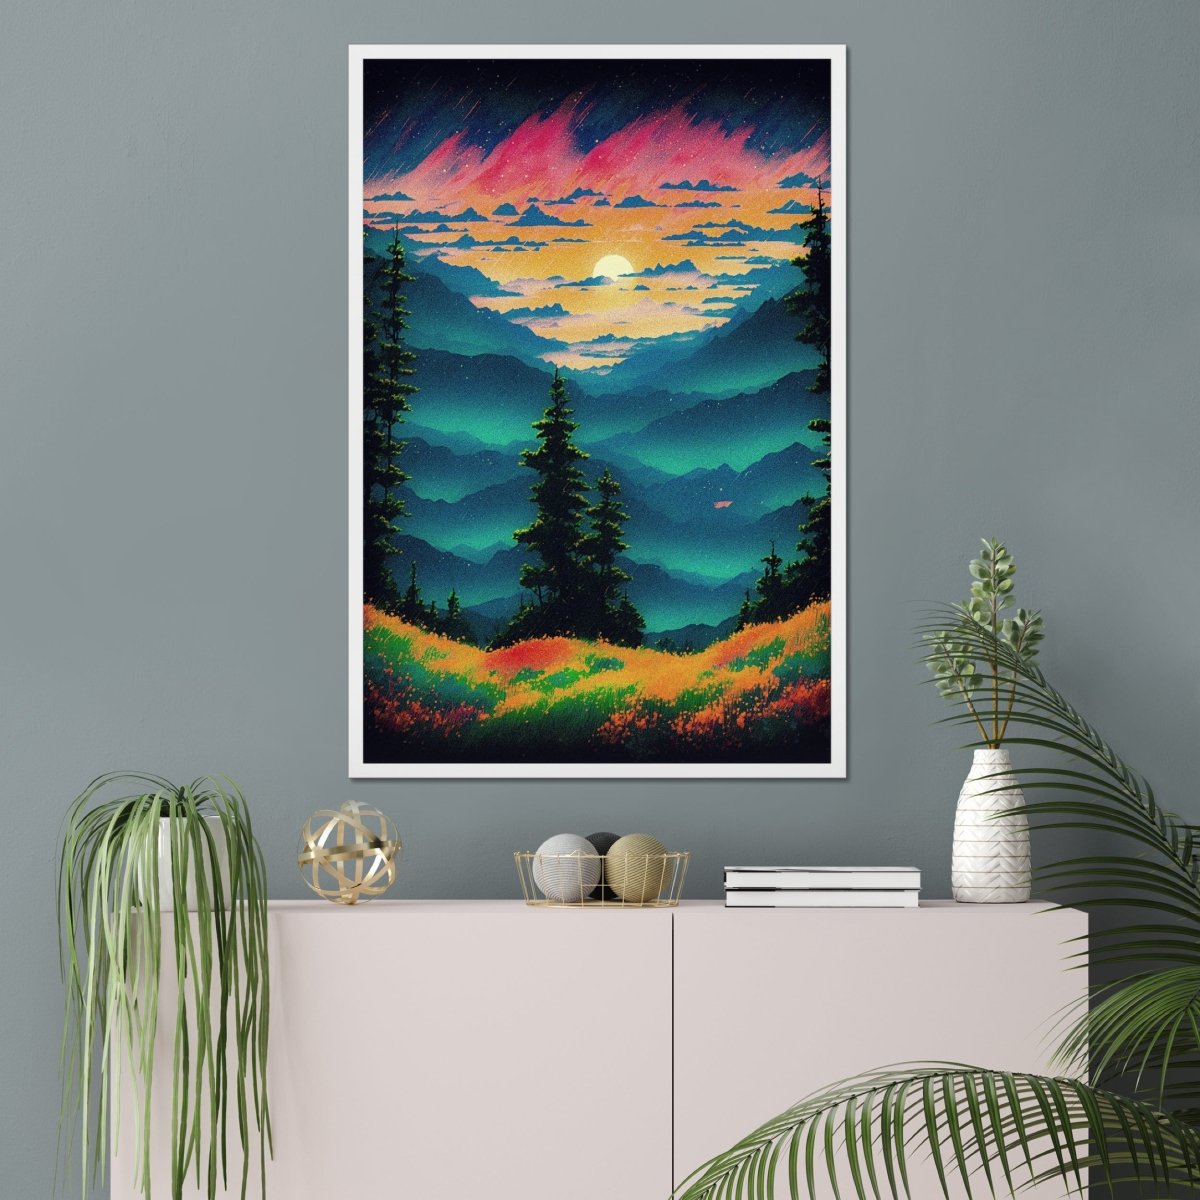 Dreamy nightfall - Art print - Poster - Ever colorful